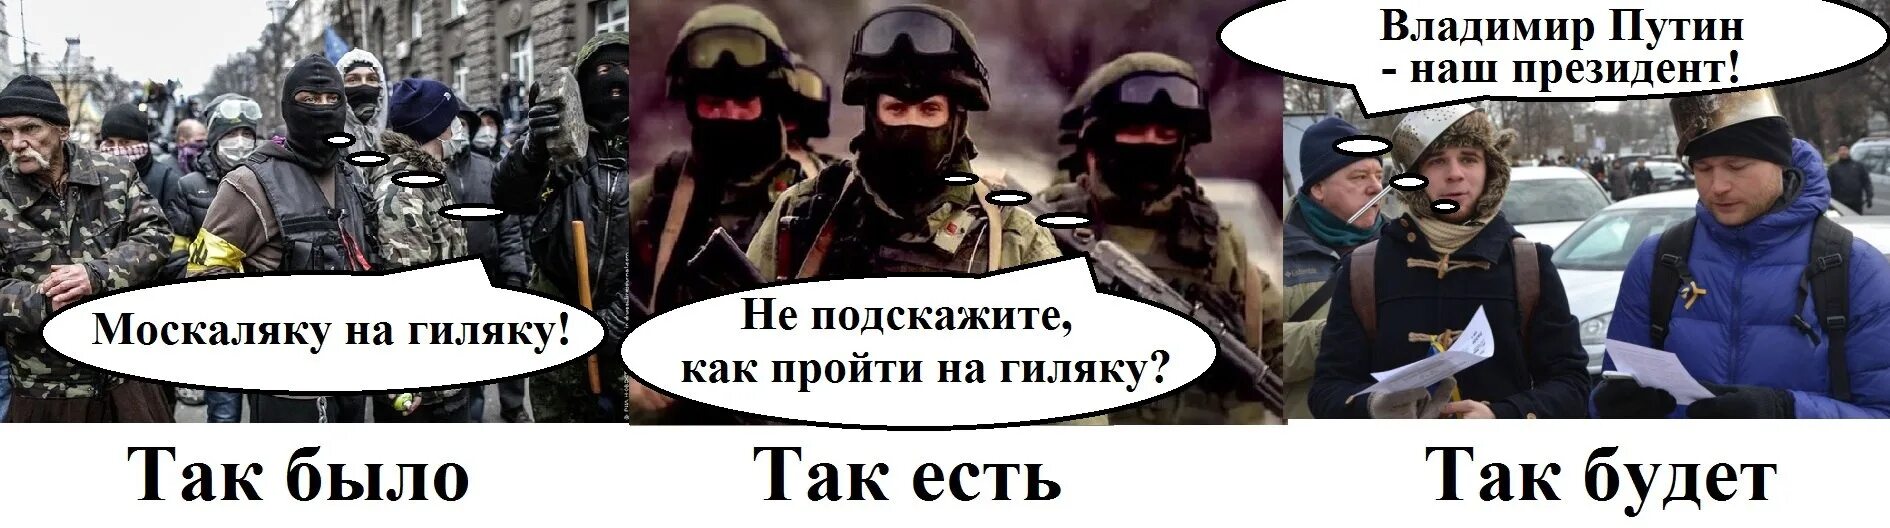 Москаляку на гиляку. Украинцы: москаляку на гиляку. Лозунг украинских националистов москаляку на гиляку. Москаляку на гиляку Мем. Подскажи откуда